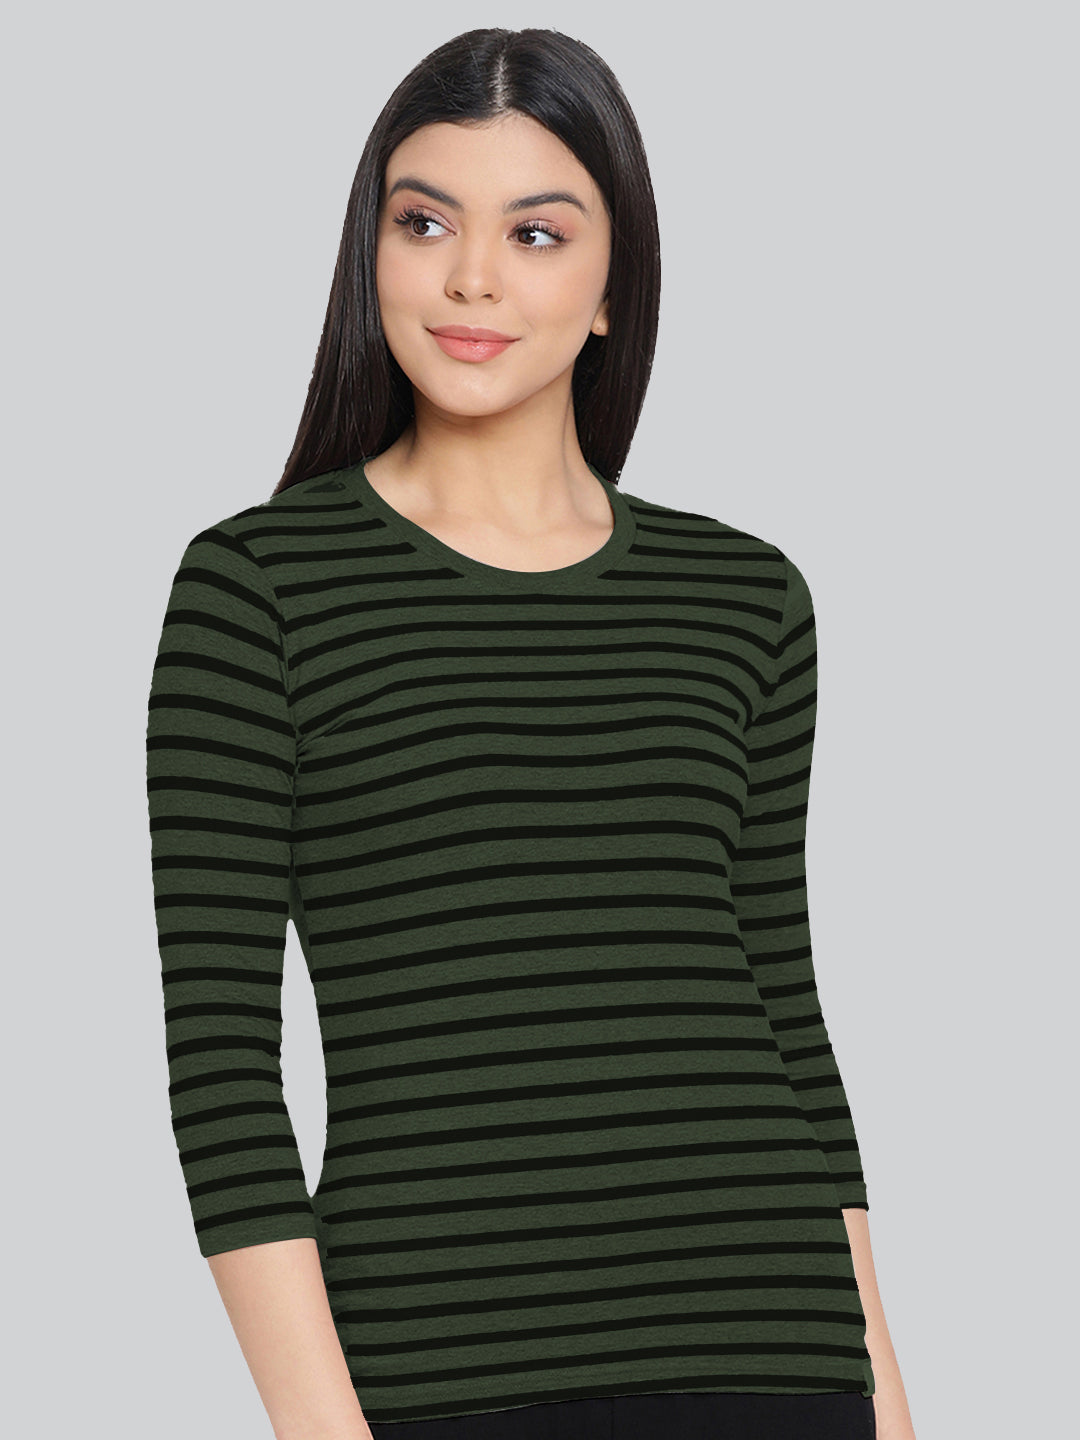 Olive Base with Black Stripes Round Neck 3/4 Sleeve T-Shirt #408